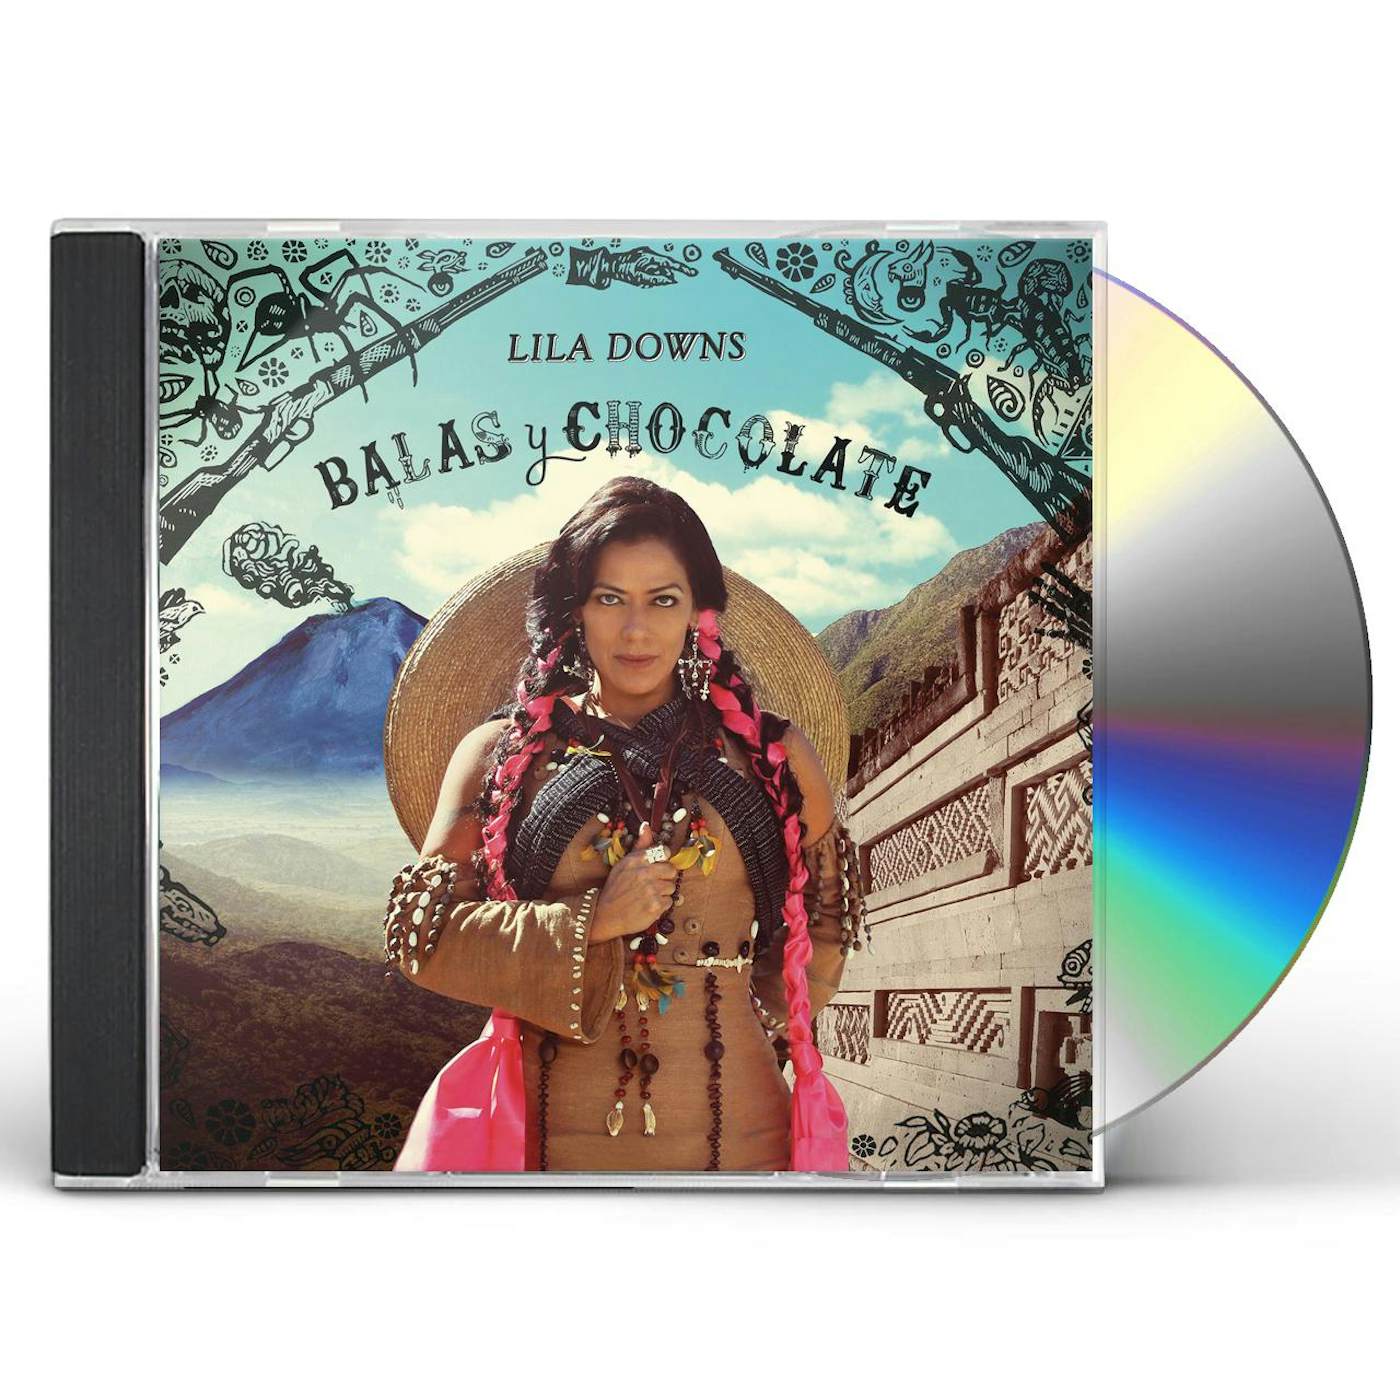 Lila Downs BALAS Y CHOCOLATE CD